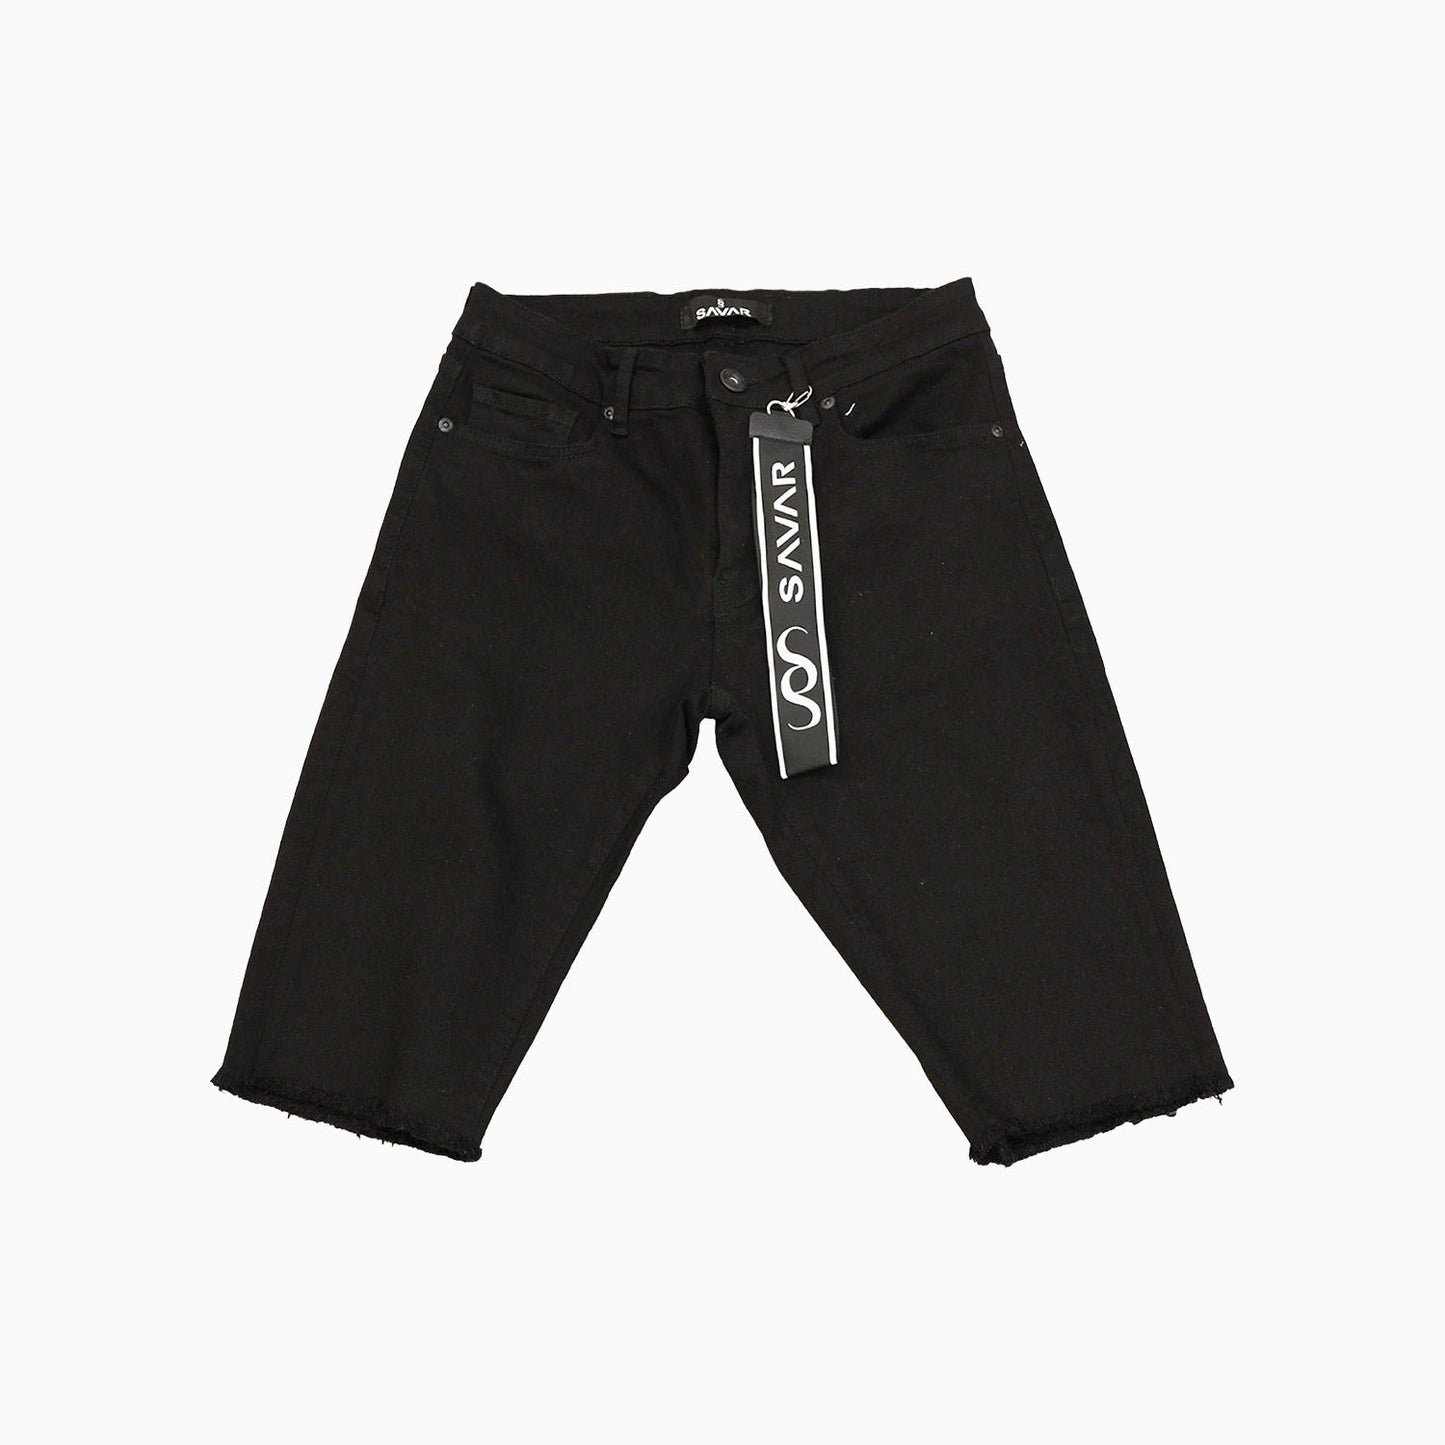 Men's Basic Jet Black Shorts